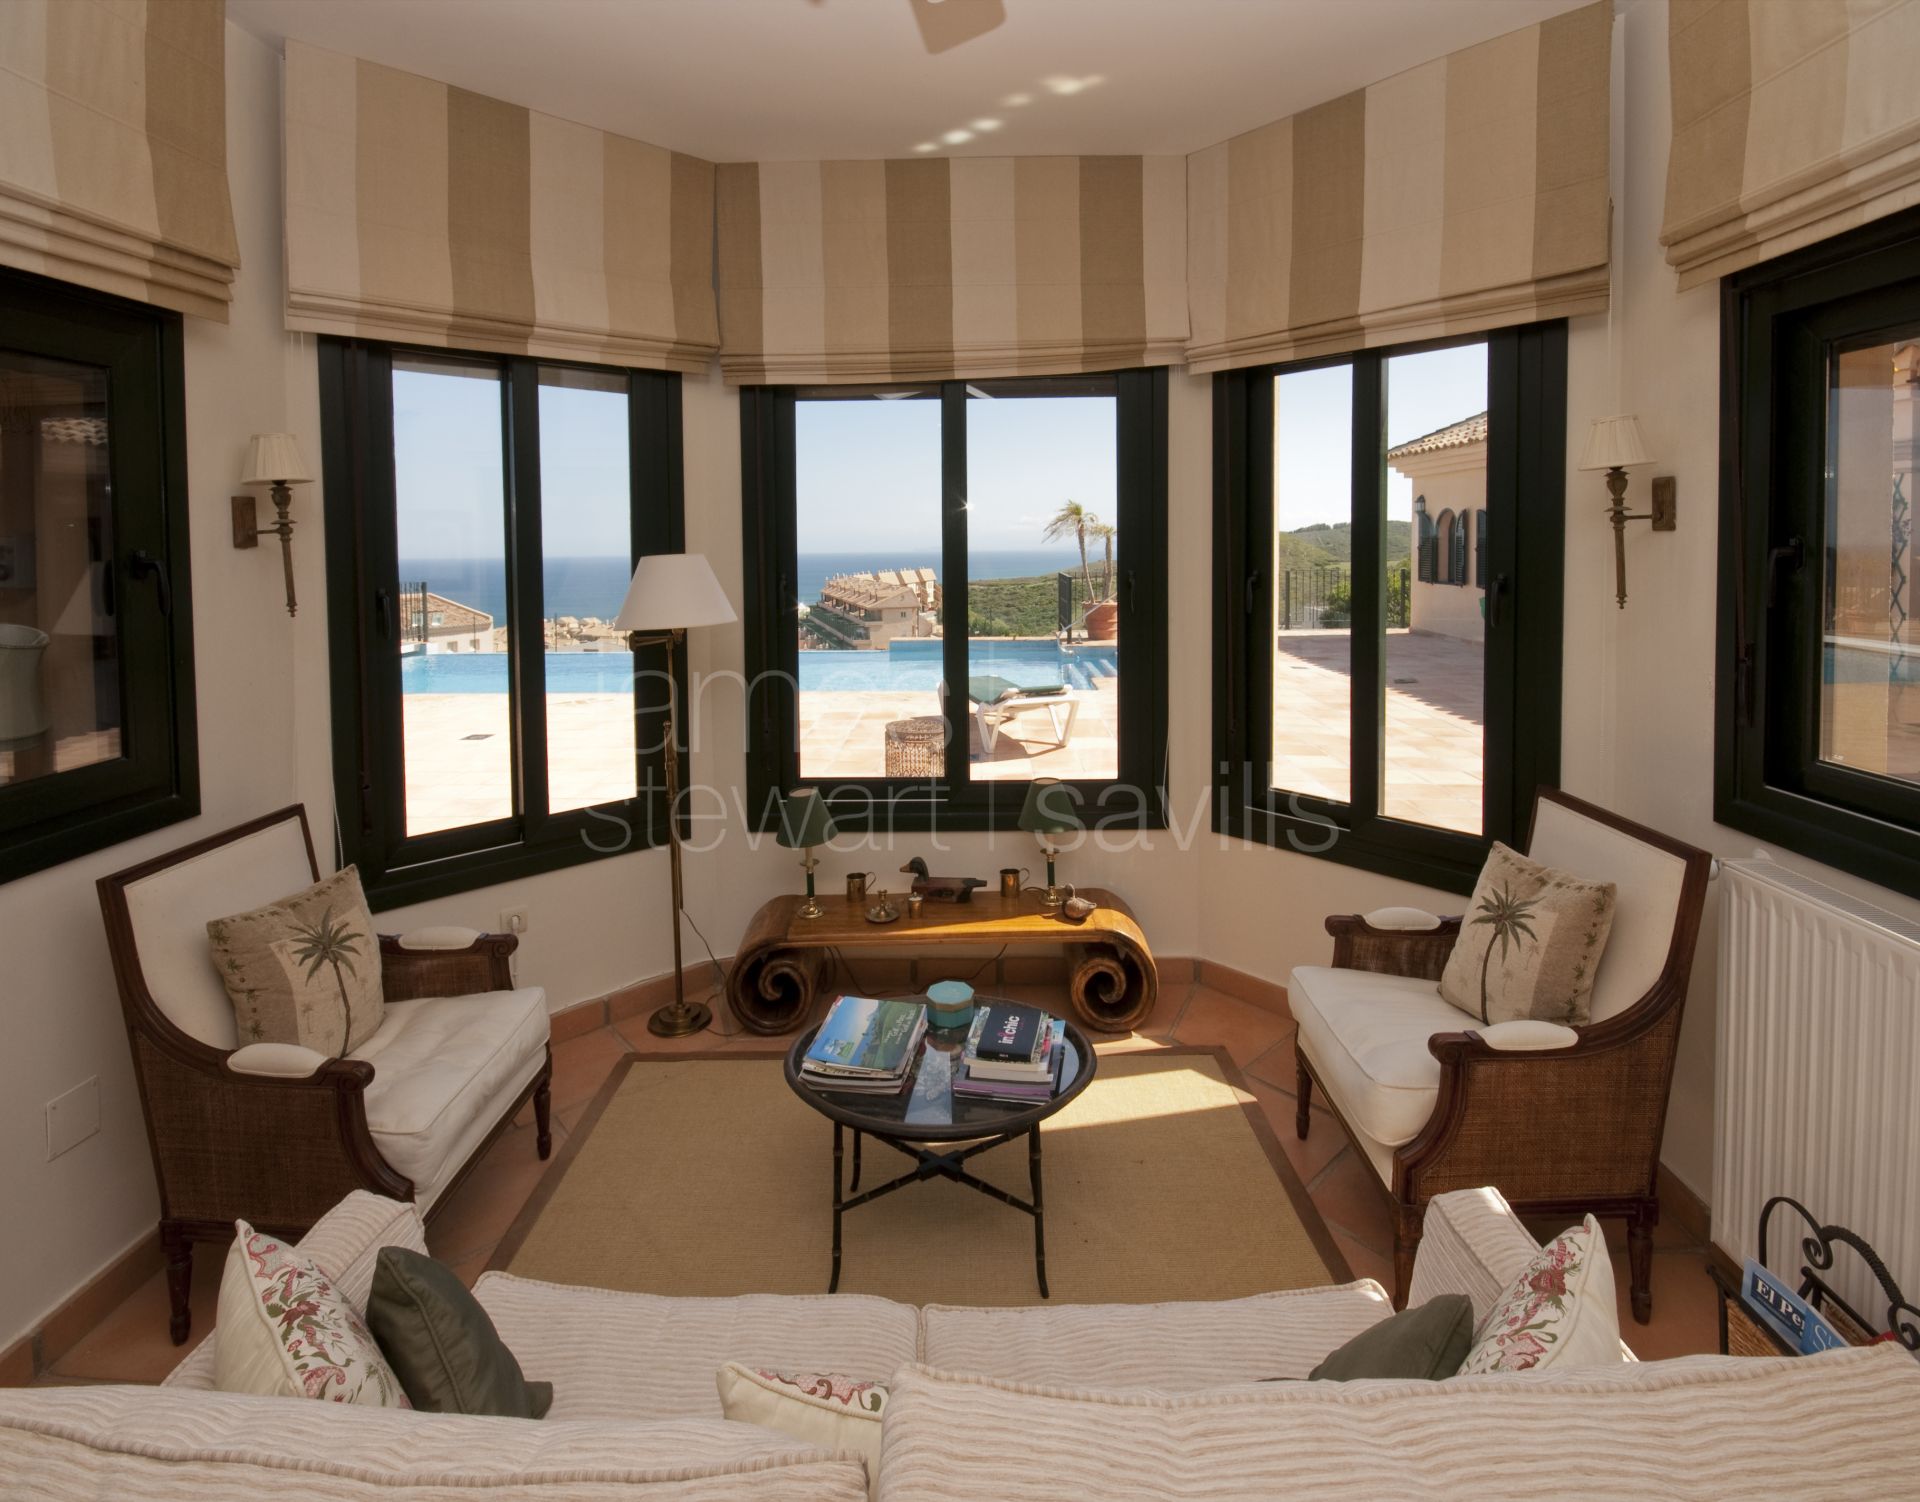 Fantástica villa con estilo andaluz e impresionantes vistas al mar mediterráneo